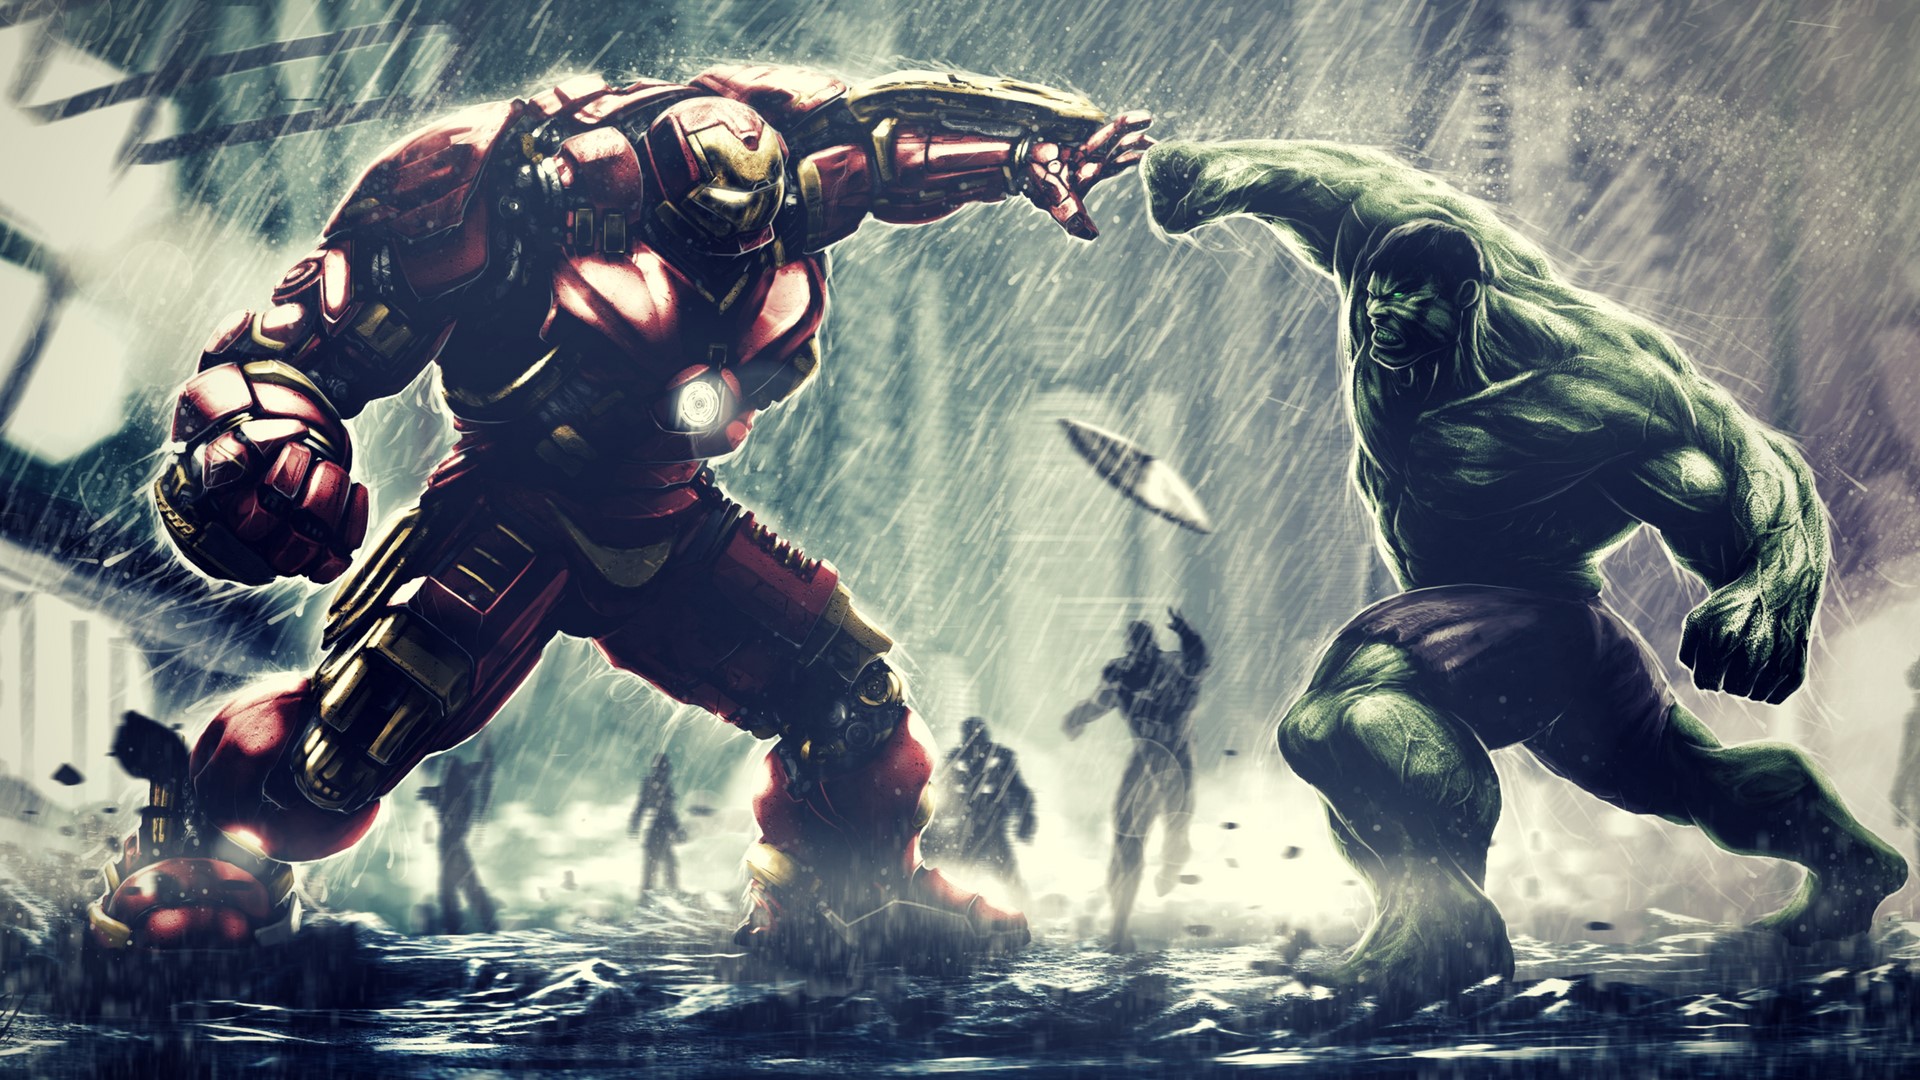 Wallpaper / Iron Man, Hulk, Marvel Cinematic Universe, Marvel Comics, superhero, Avengers: Age of Ultron, The Avengers